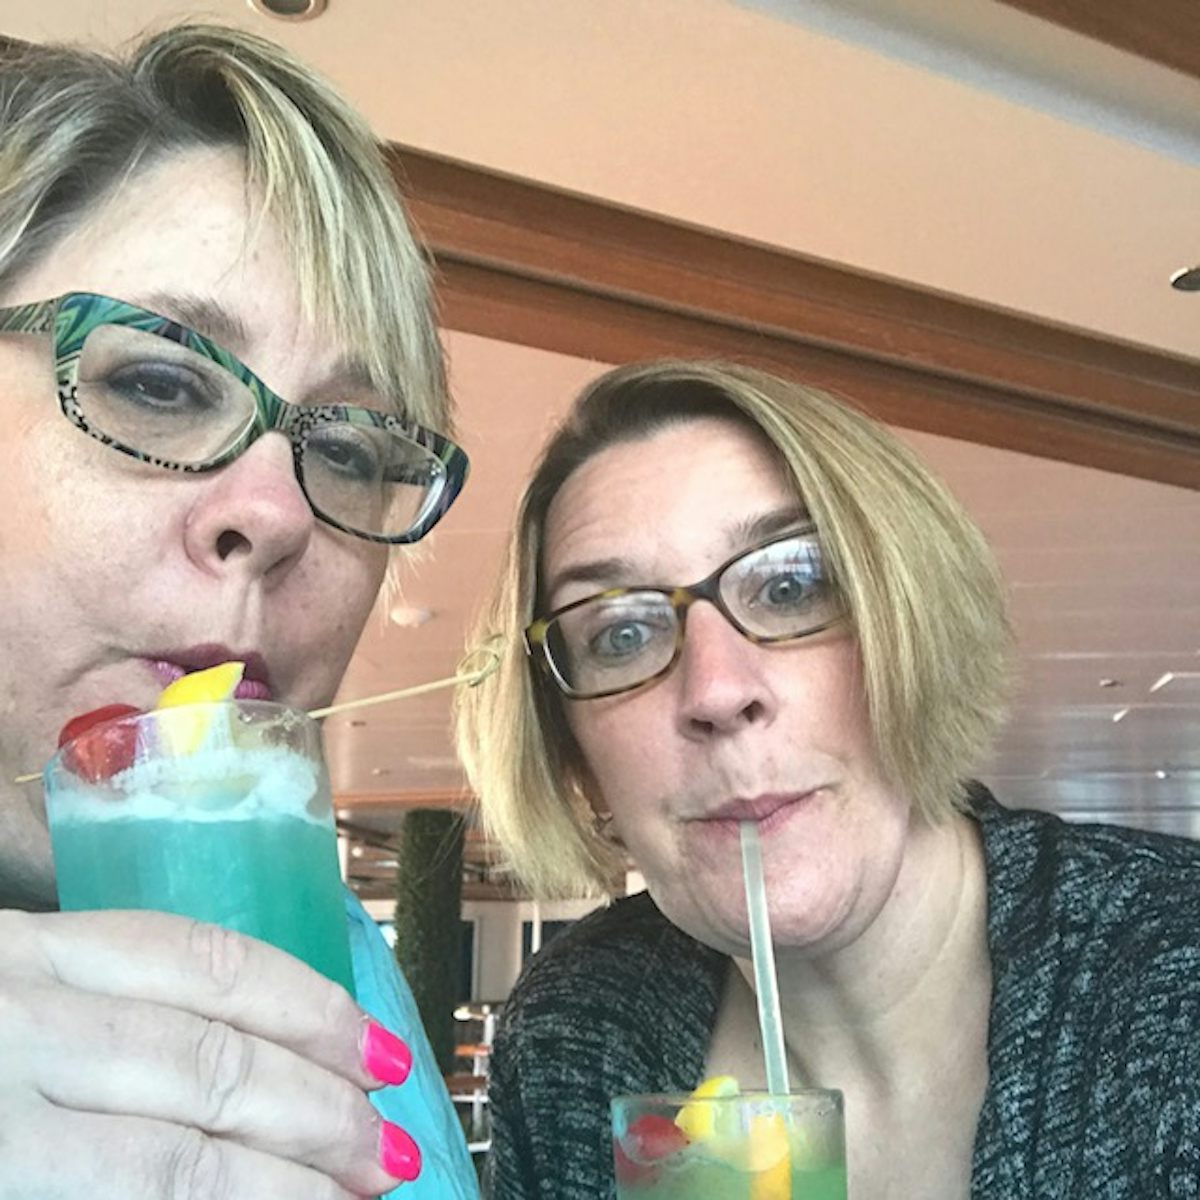 Us enjoying frozen drinks!